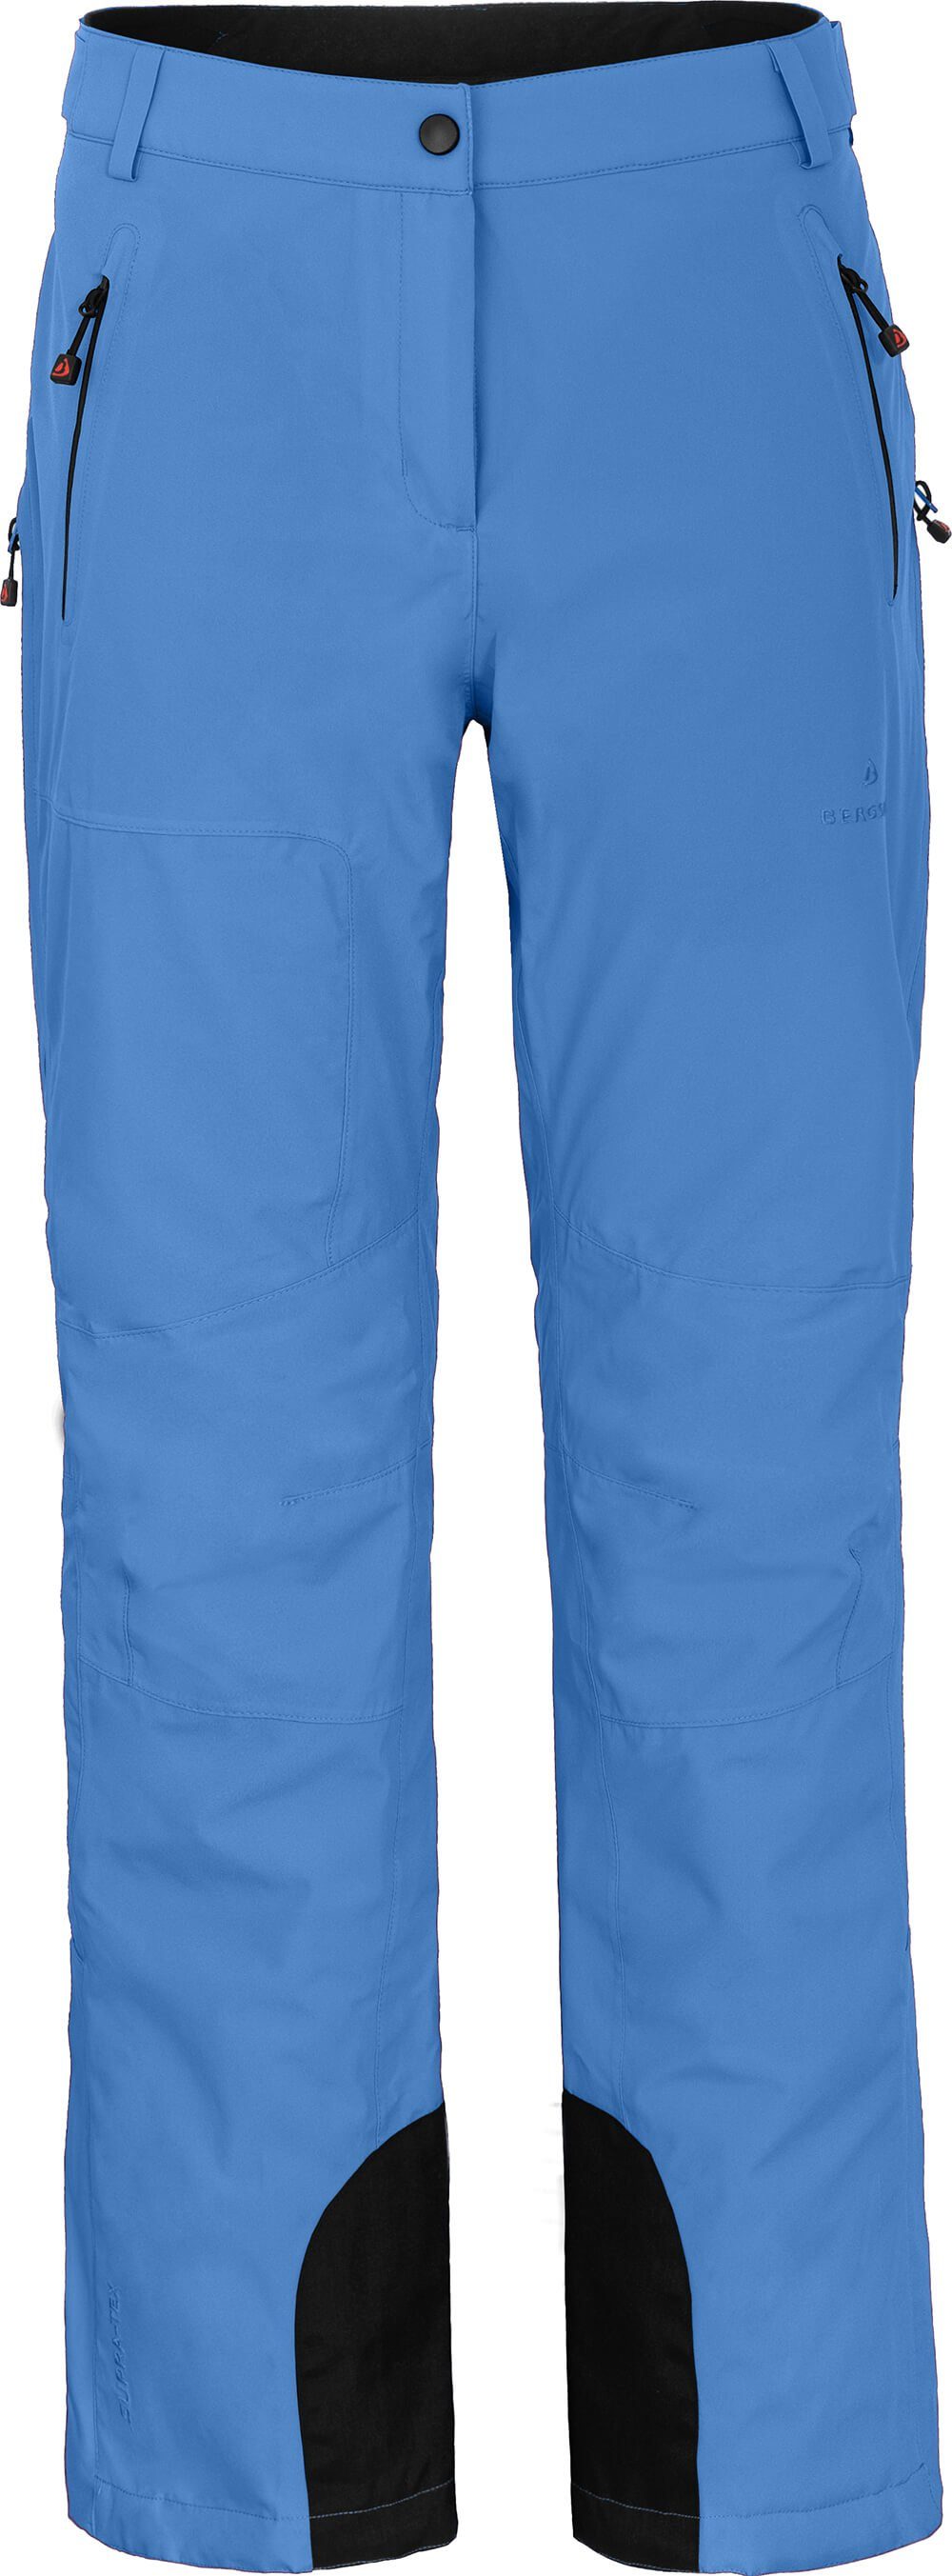 Bergson Skihose ICE Damen Skihose, wattiert, 20000 mm Wassersäule, Normalgrößen, hell blau